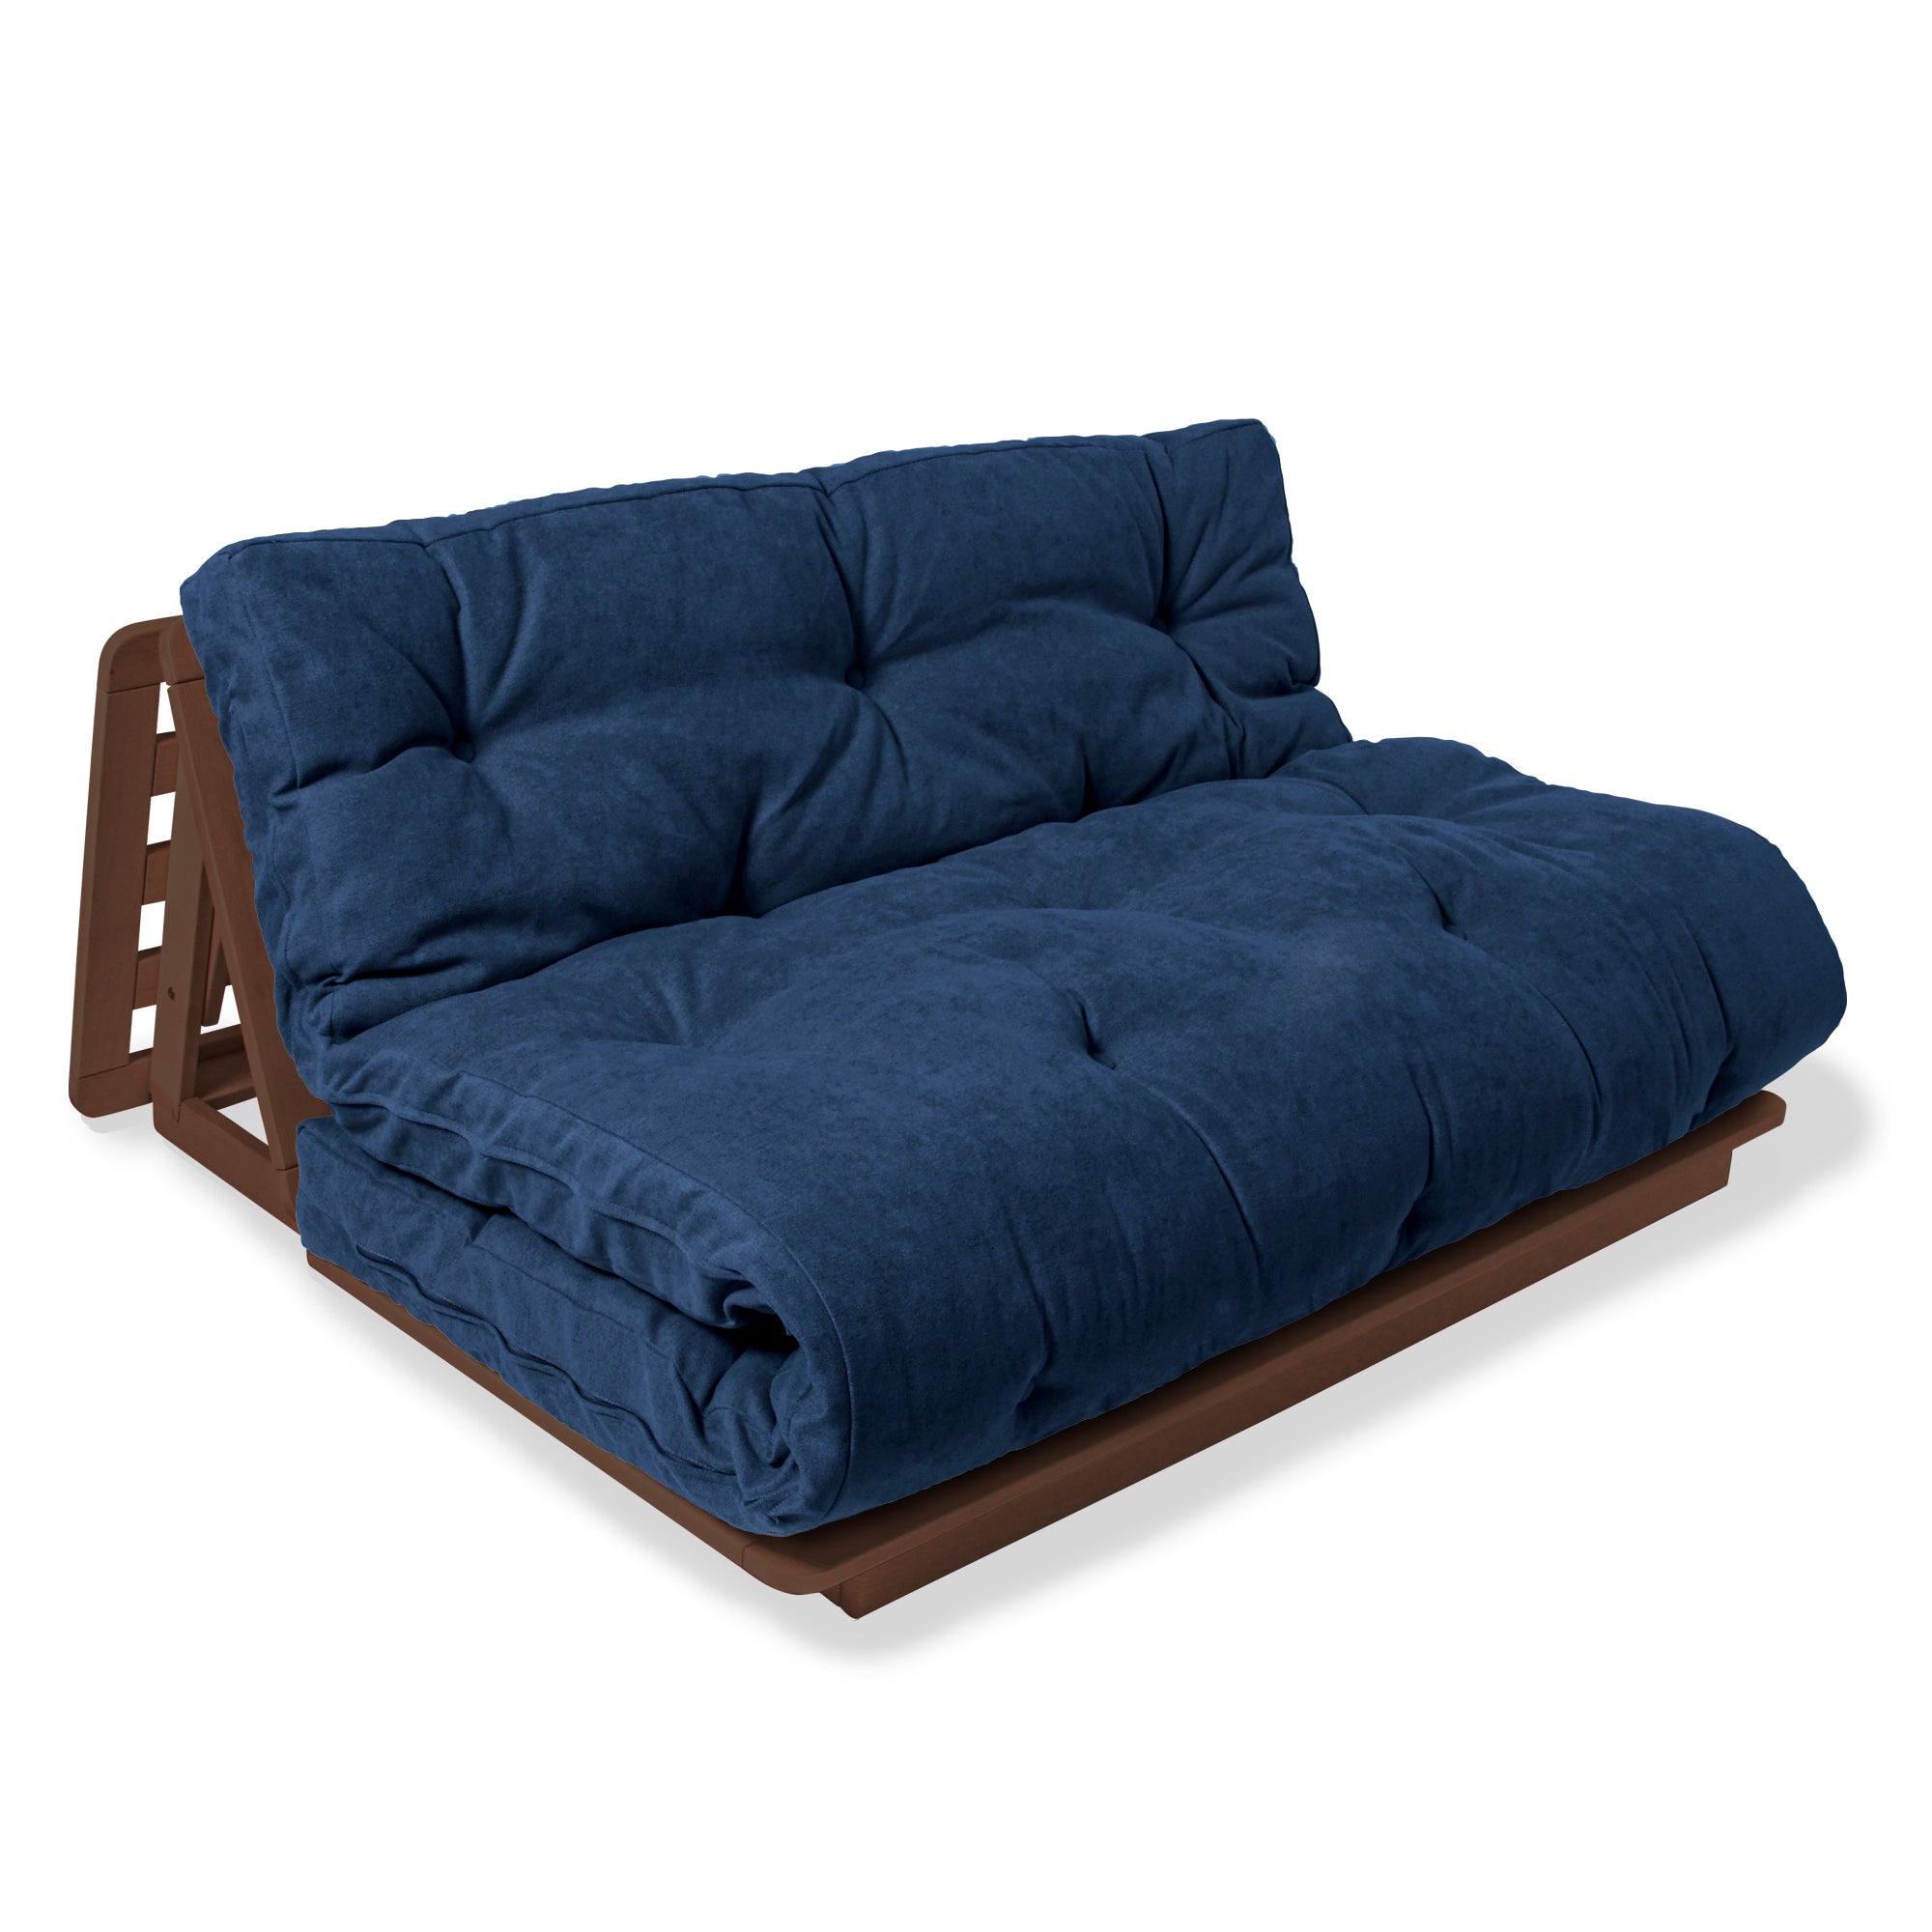 LAYTI-140 Futon Chair-walnut frame-blue fabric